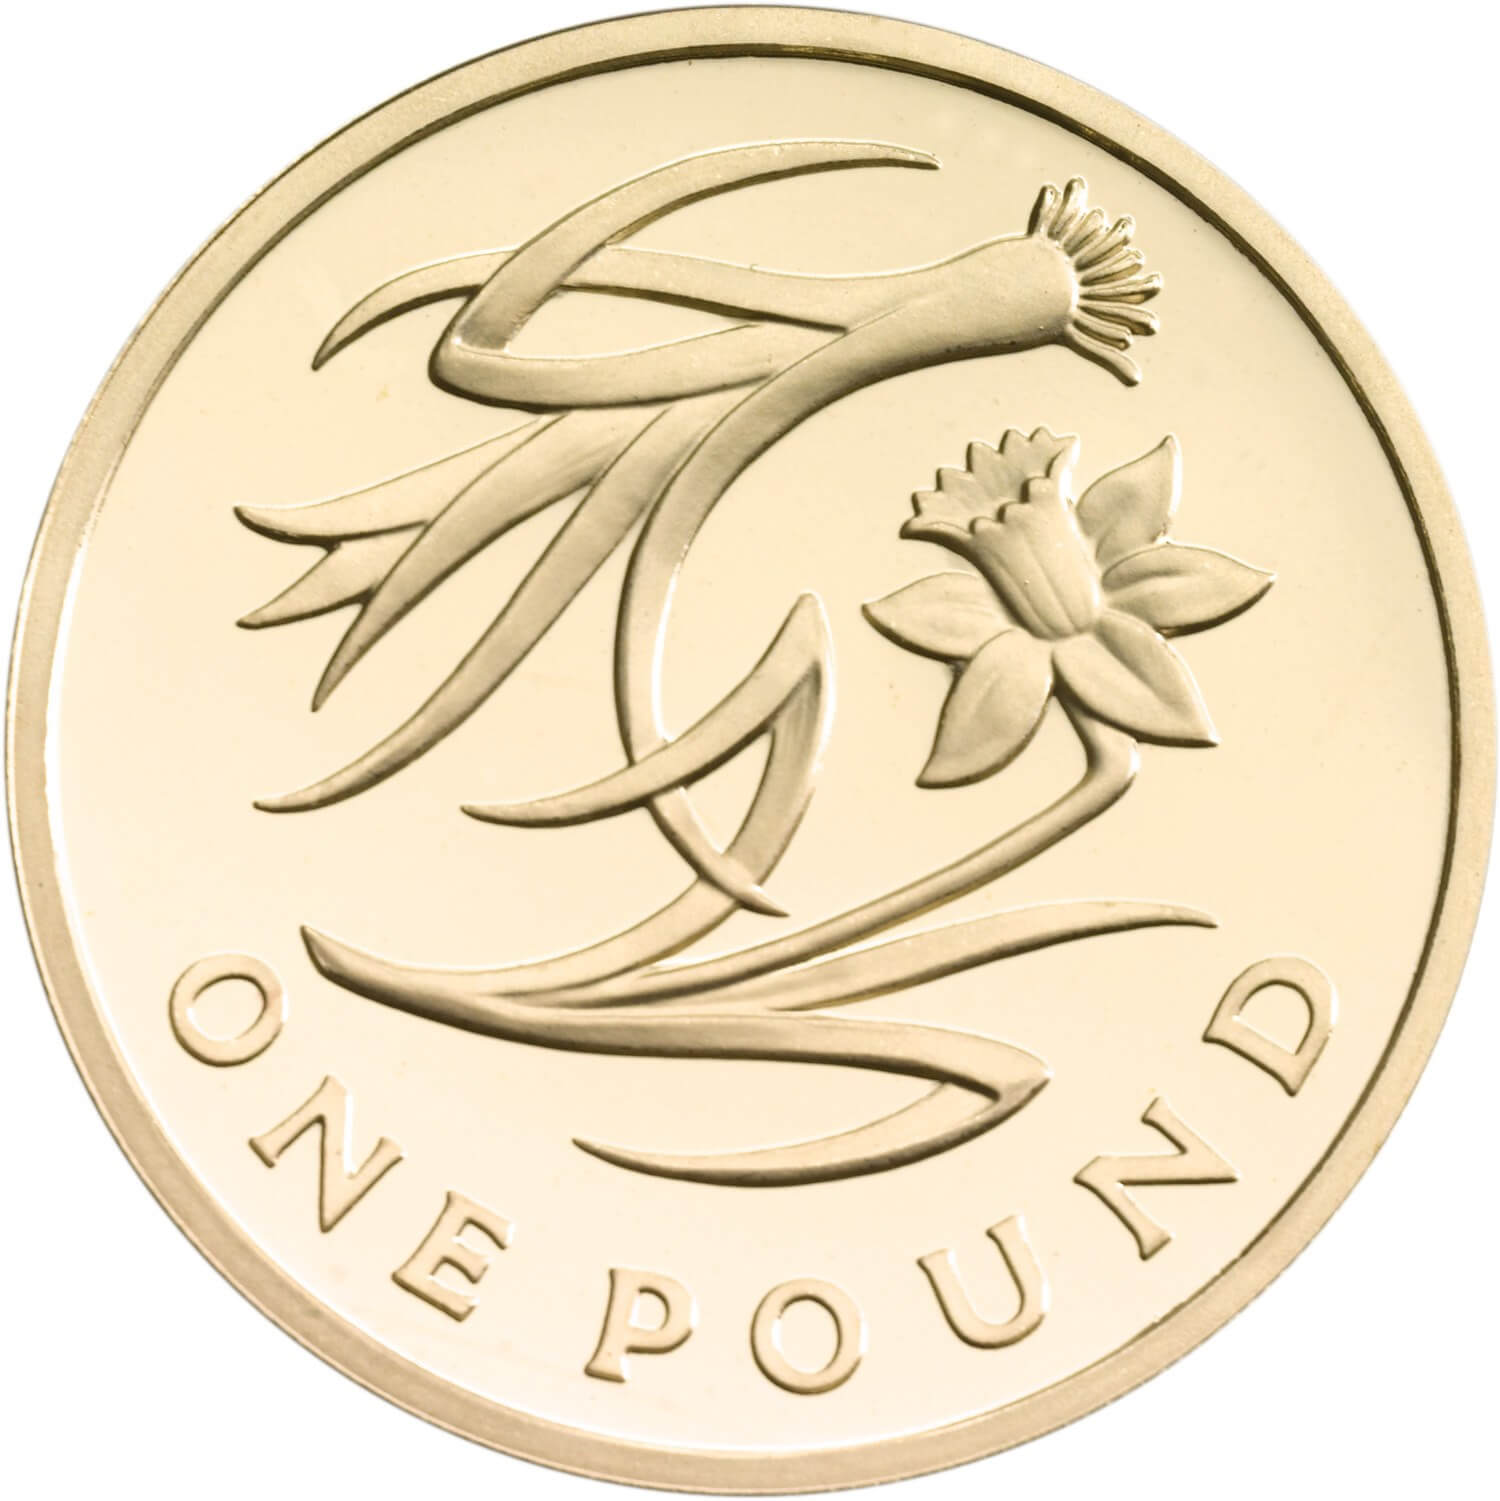 2013_one_pound_rev_coin.jpg